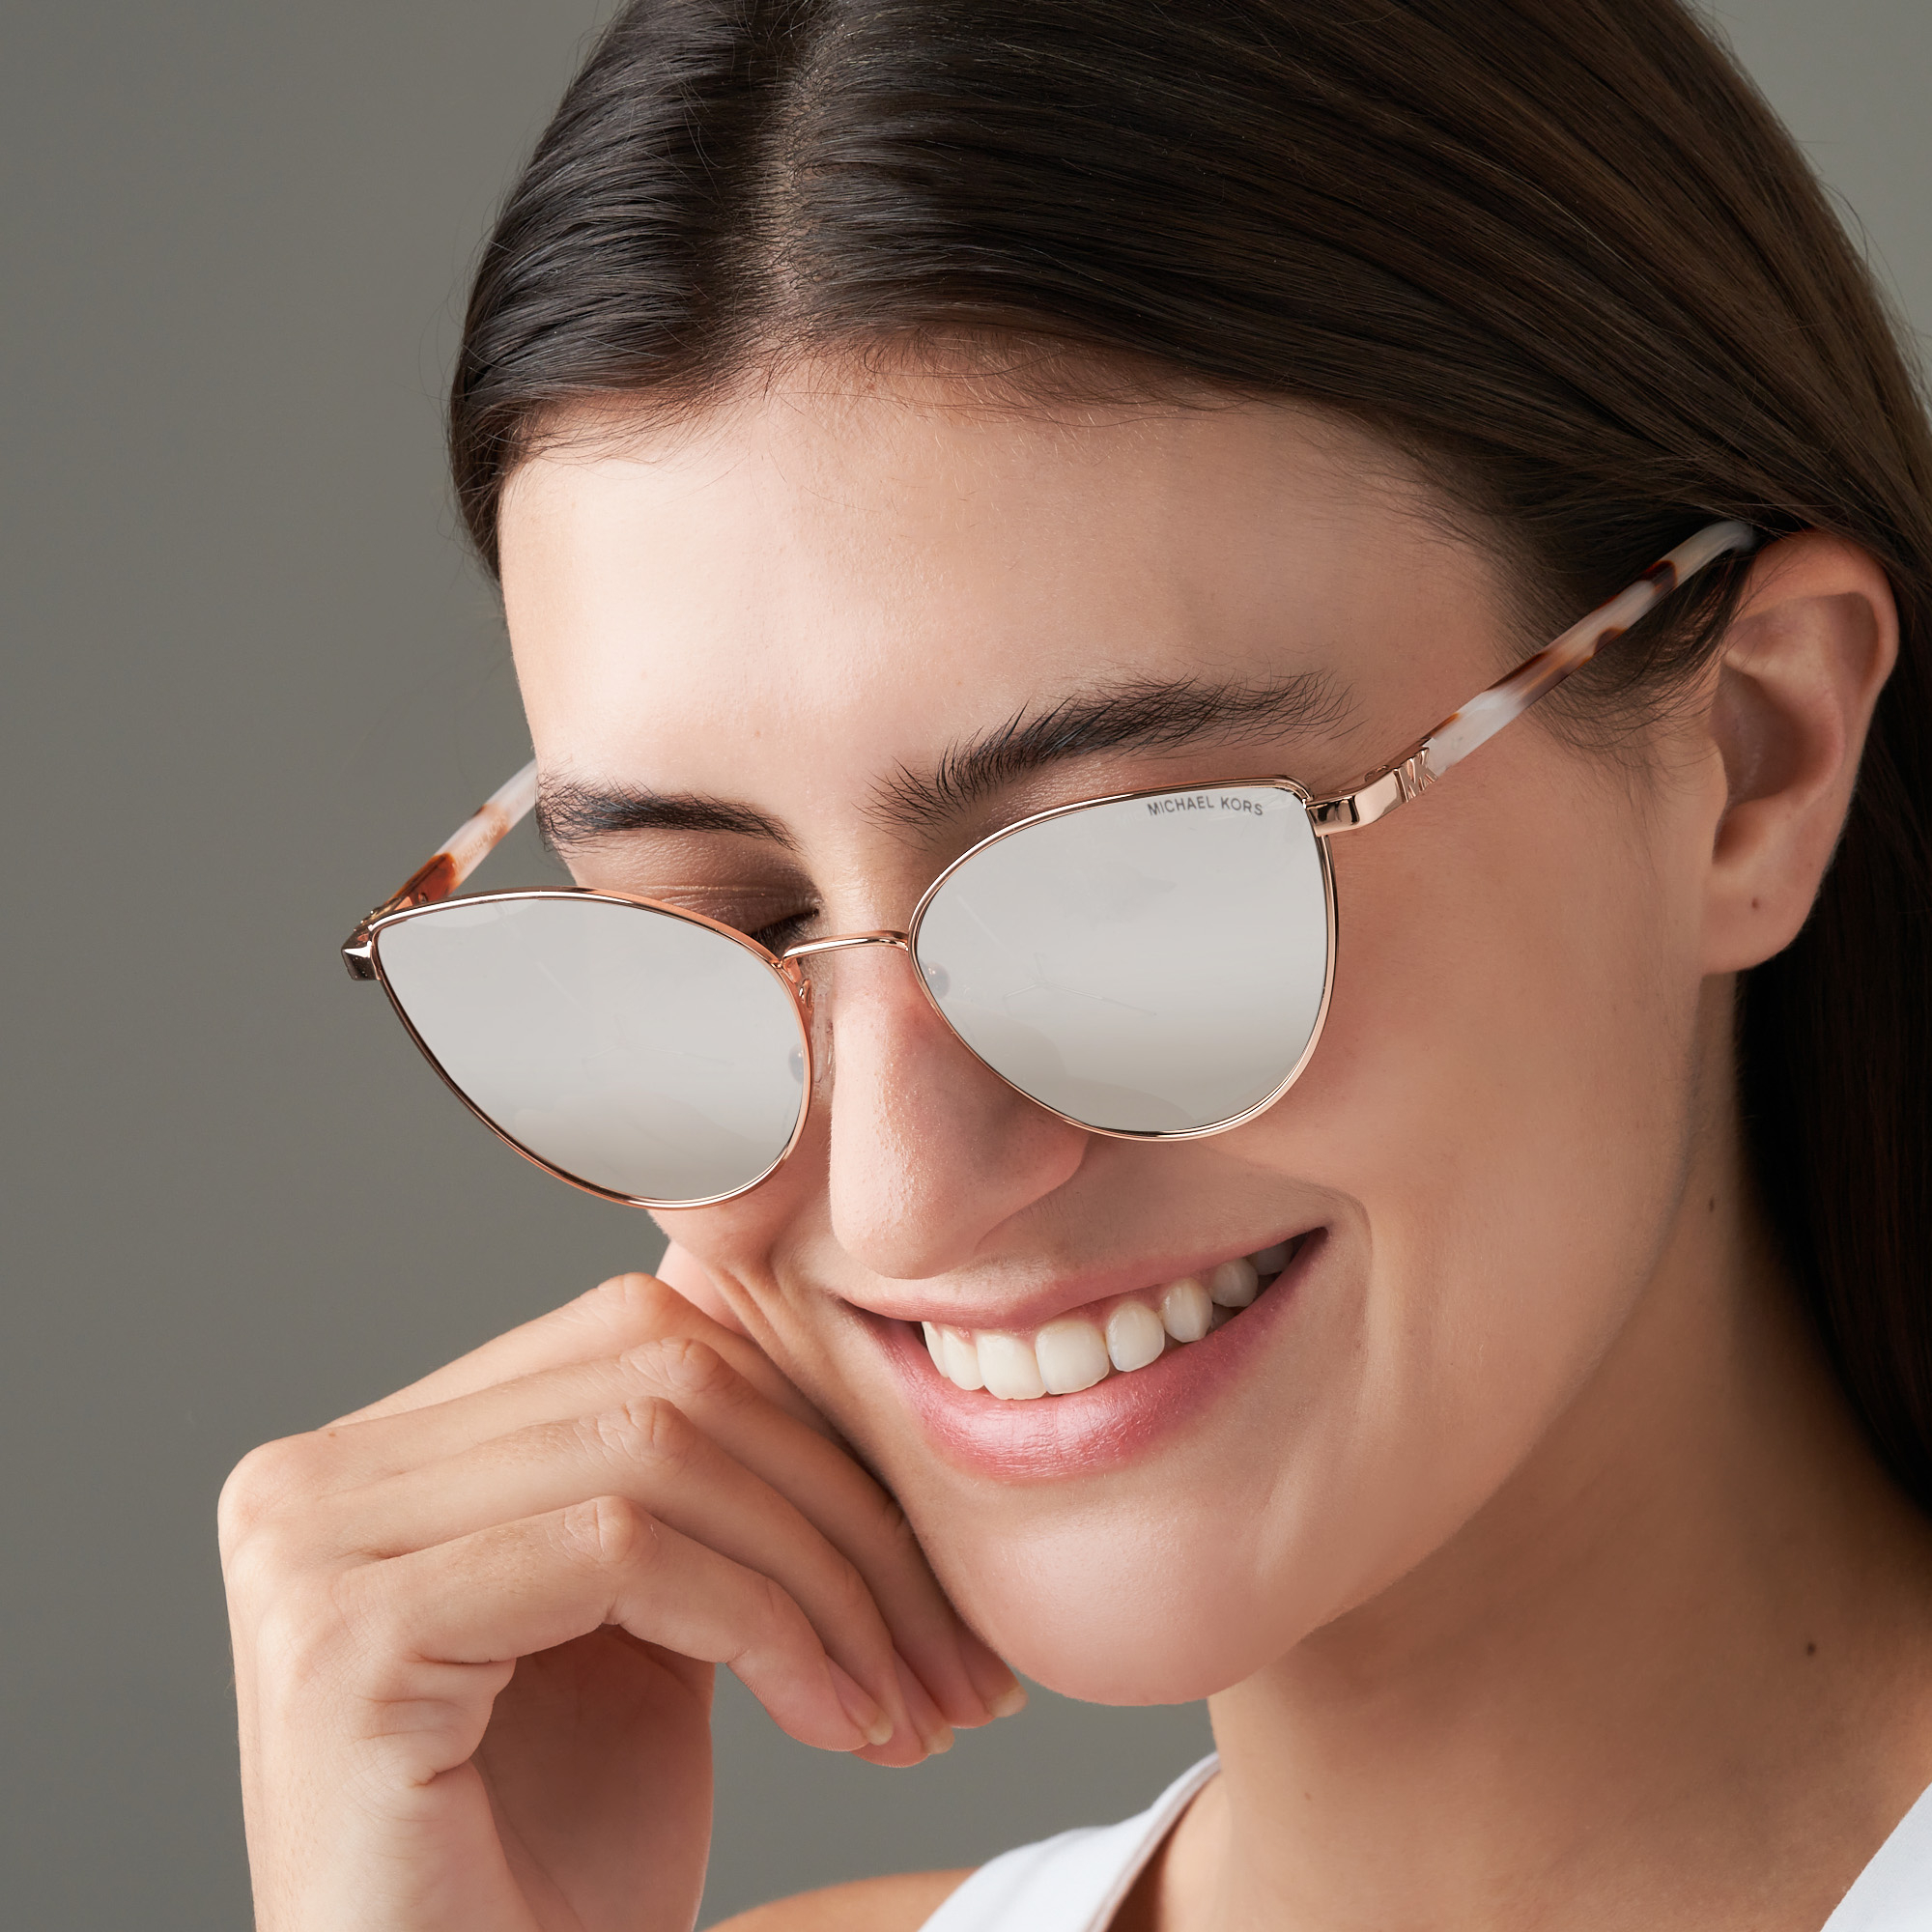 44% off on Ladies Arrowhead Sunglasses | OneDayOnly